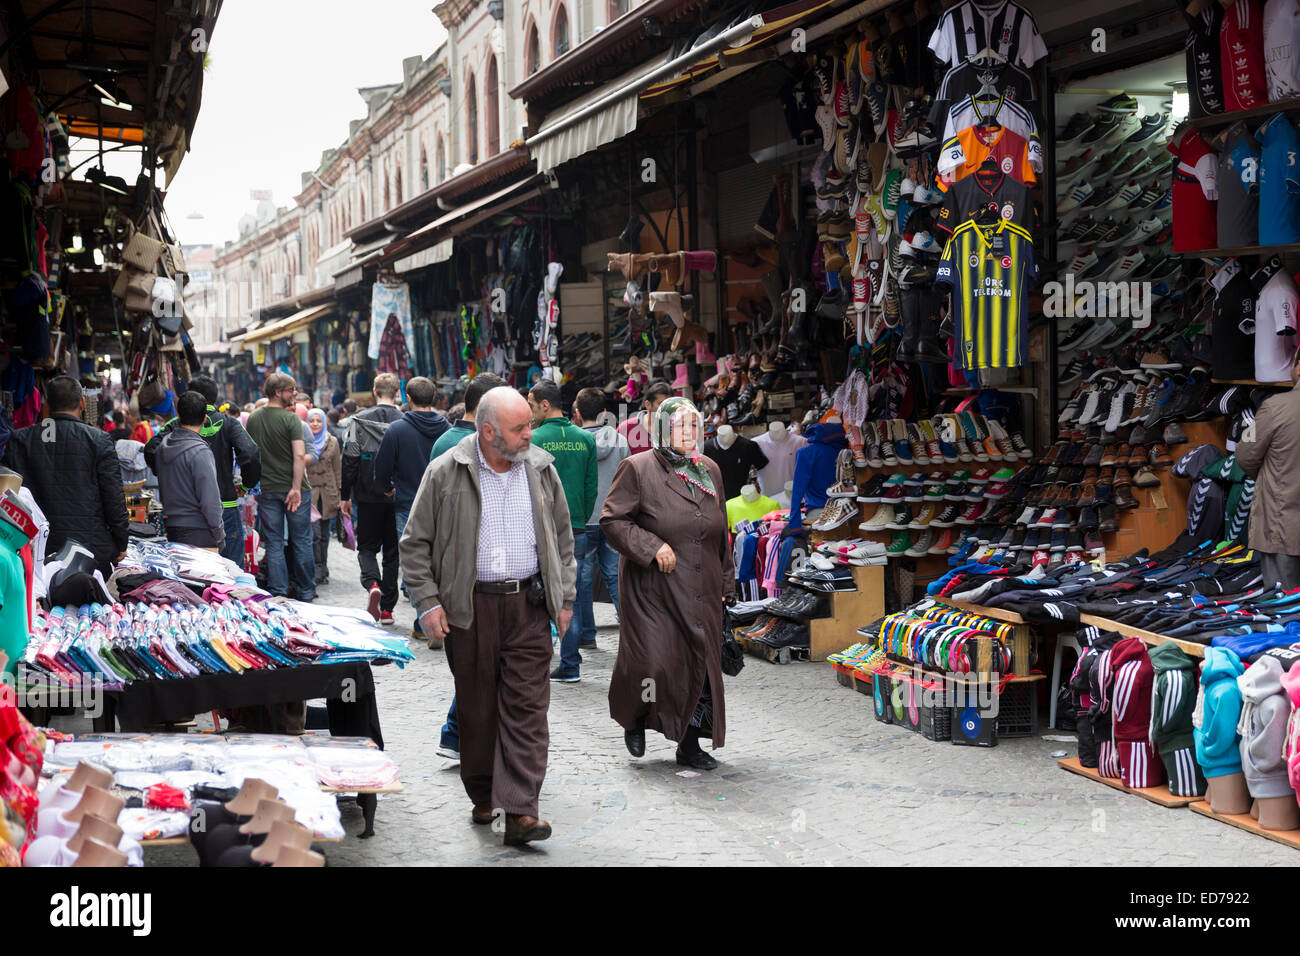 Muslim couple shopping in The Grand Bazaar, Kapalicarsi, great market in Beyazi, Istanbul, Turkey Stock Photo